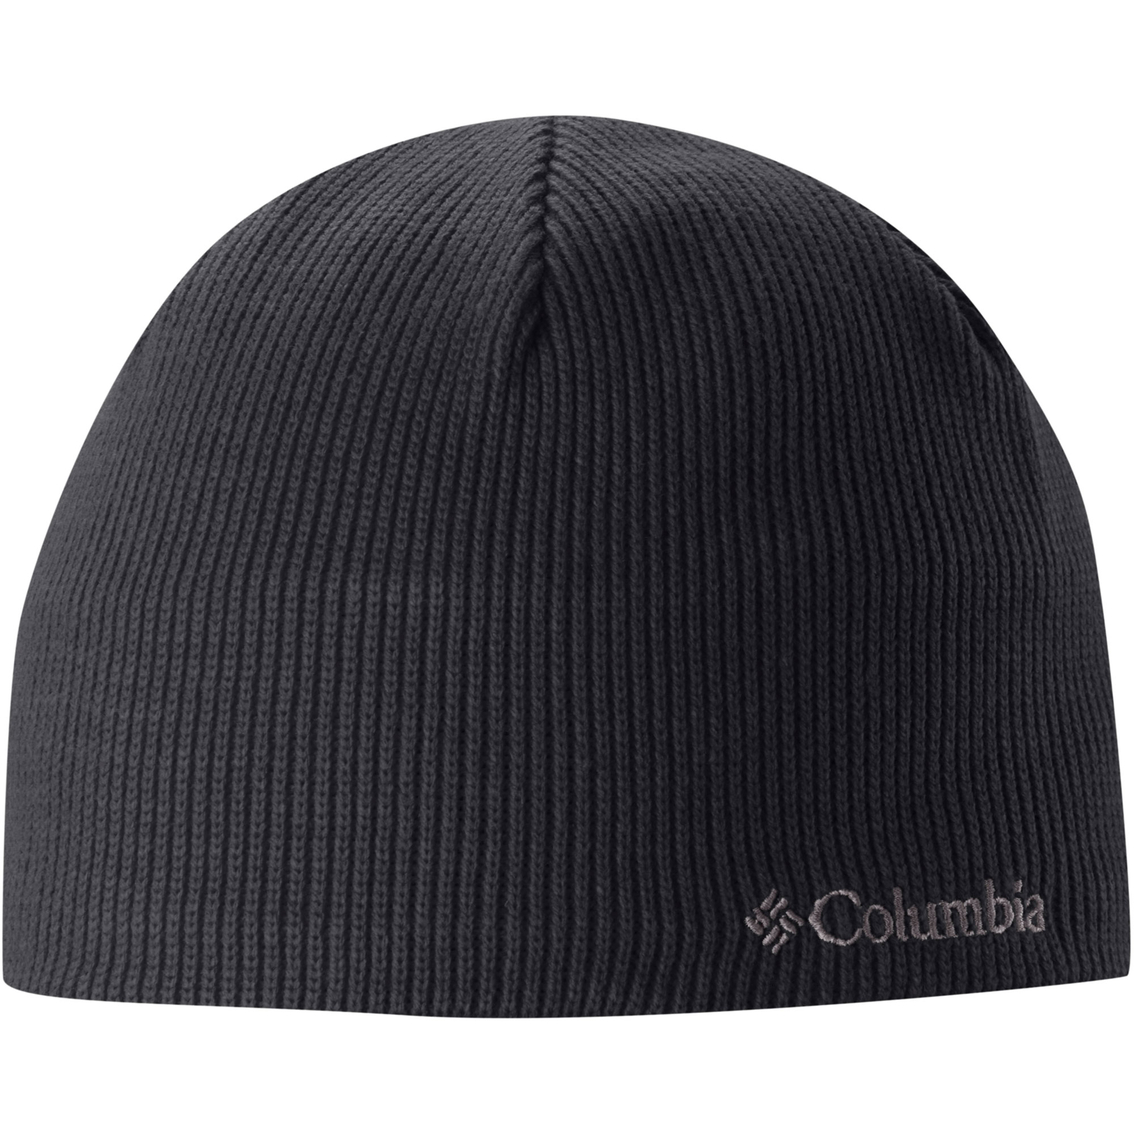 Columbia Bugaboo Beanie Hats 